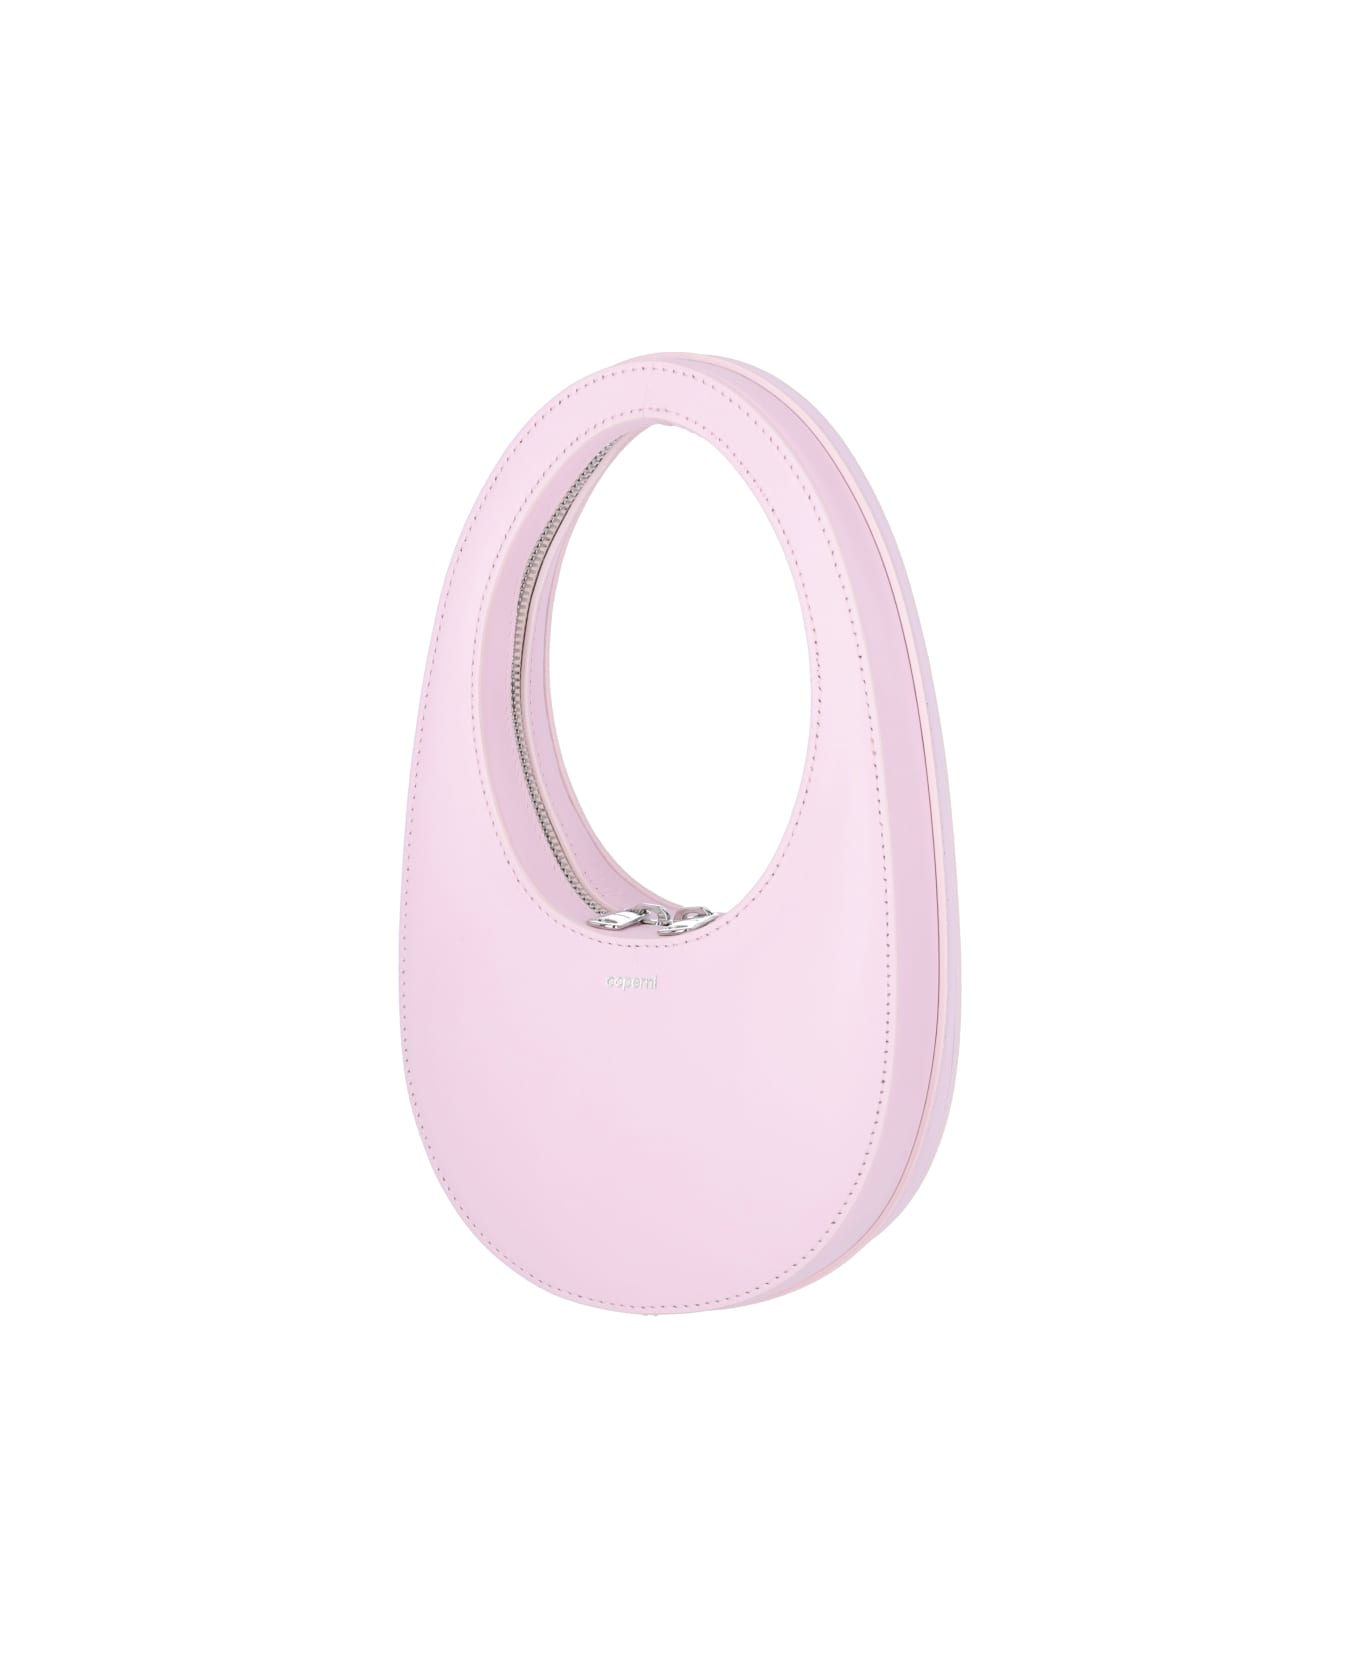 Coperni Mini Bag 'swipe' - Light Pink バッグ